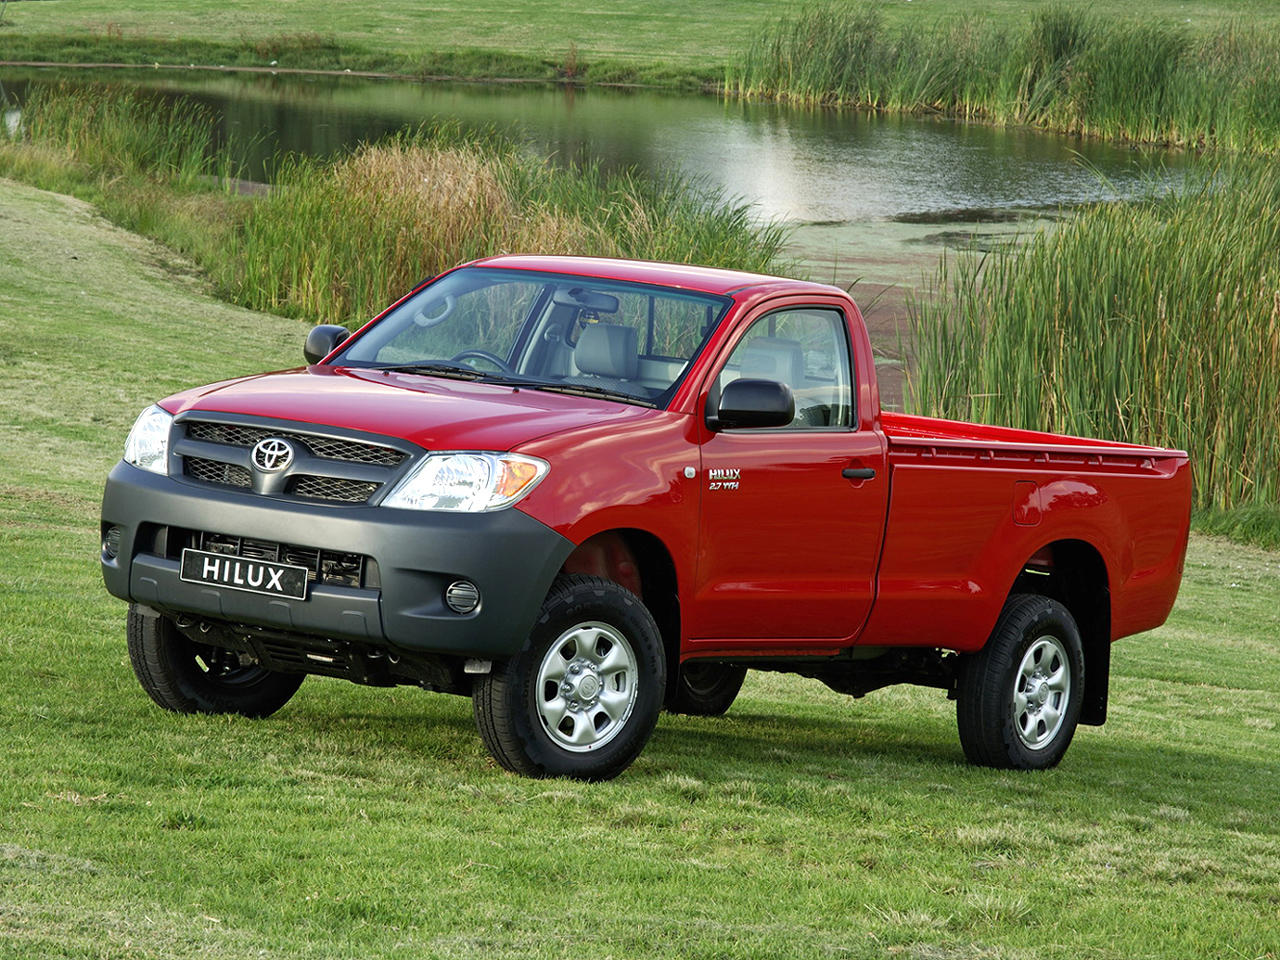 Toyota Hilux Pickup 2005. Toyota Hilux Regular Cab. Тойота Хайлюкс 3 поколения. Тойота Хайлюкс 2005 Single Cab. Недорогой пикап бу